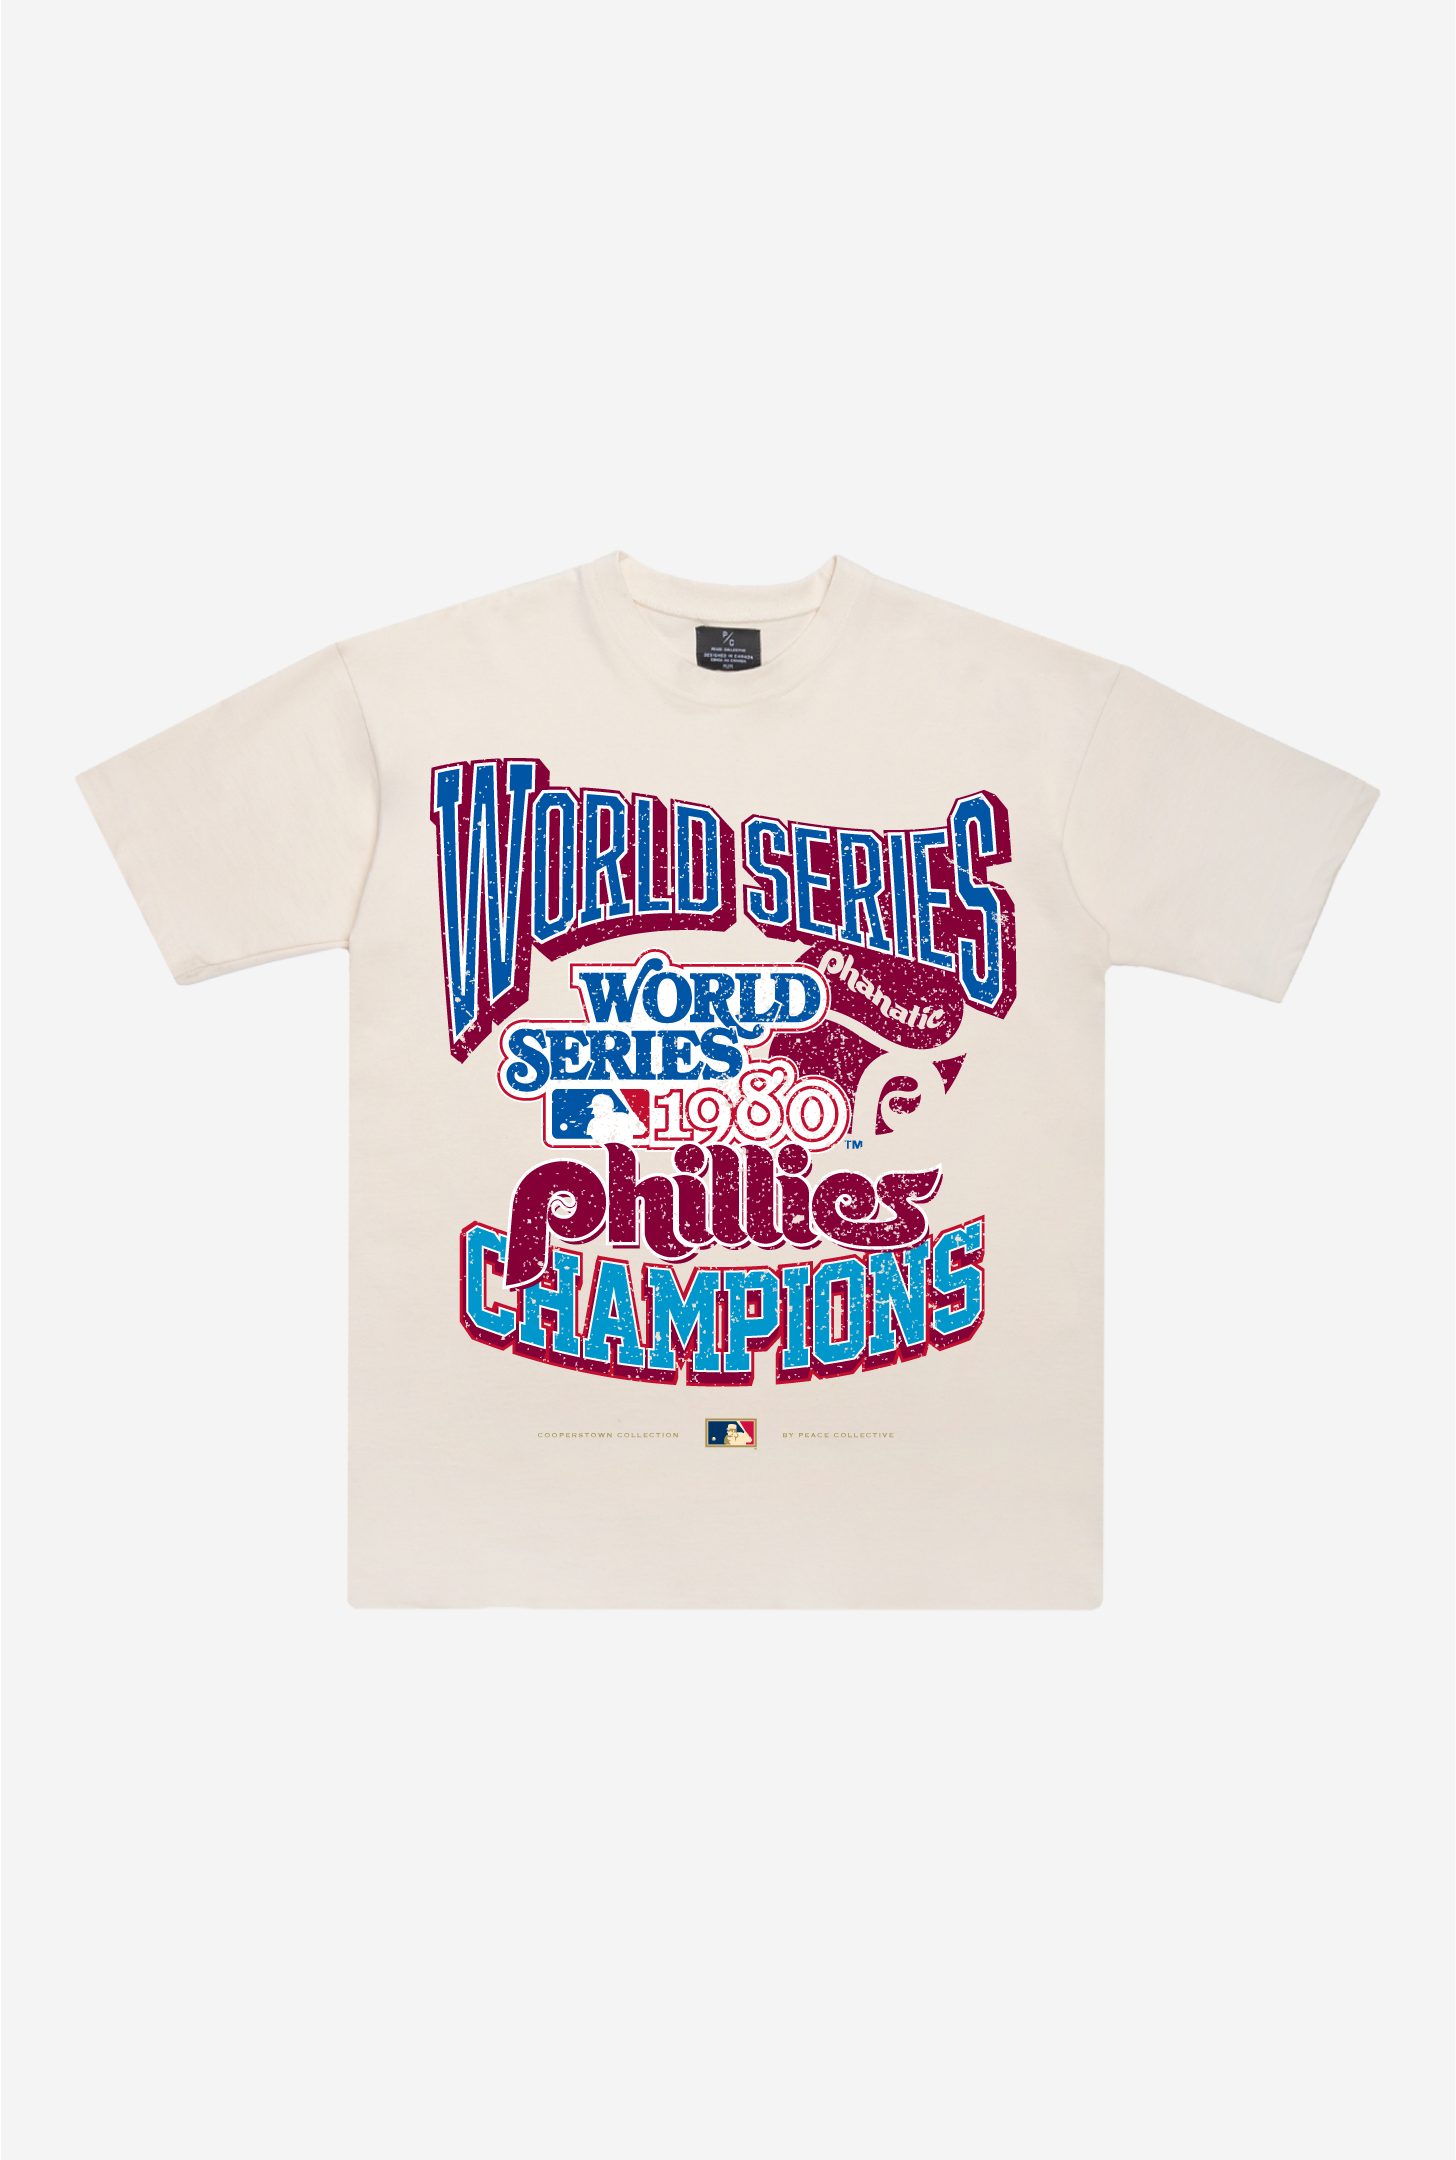 Philadelphia Phillies 1980 World Series Cooperstown Collection Premium T-Shirt - Natural